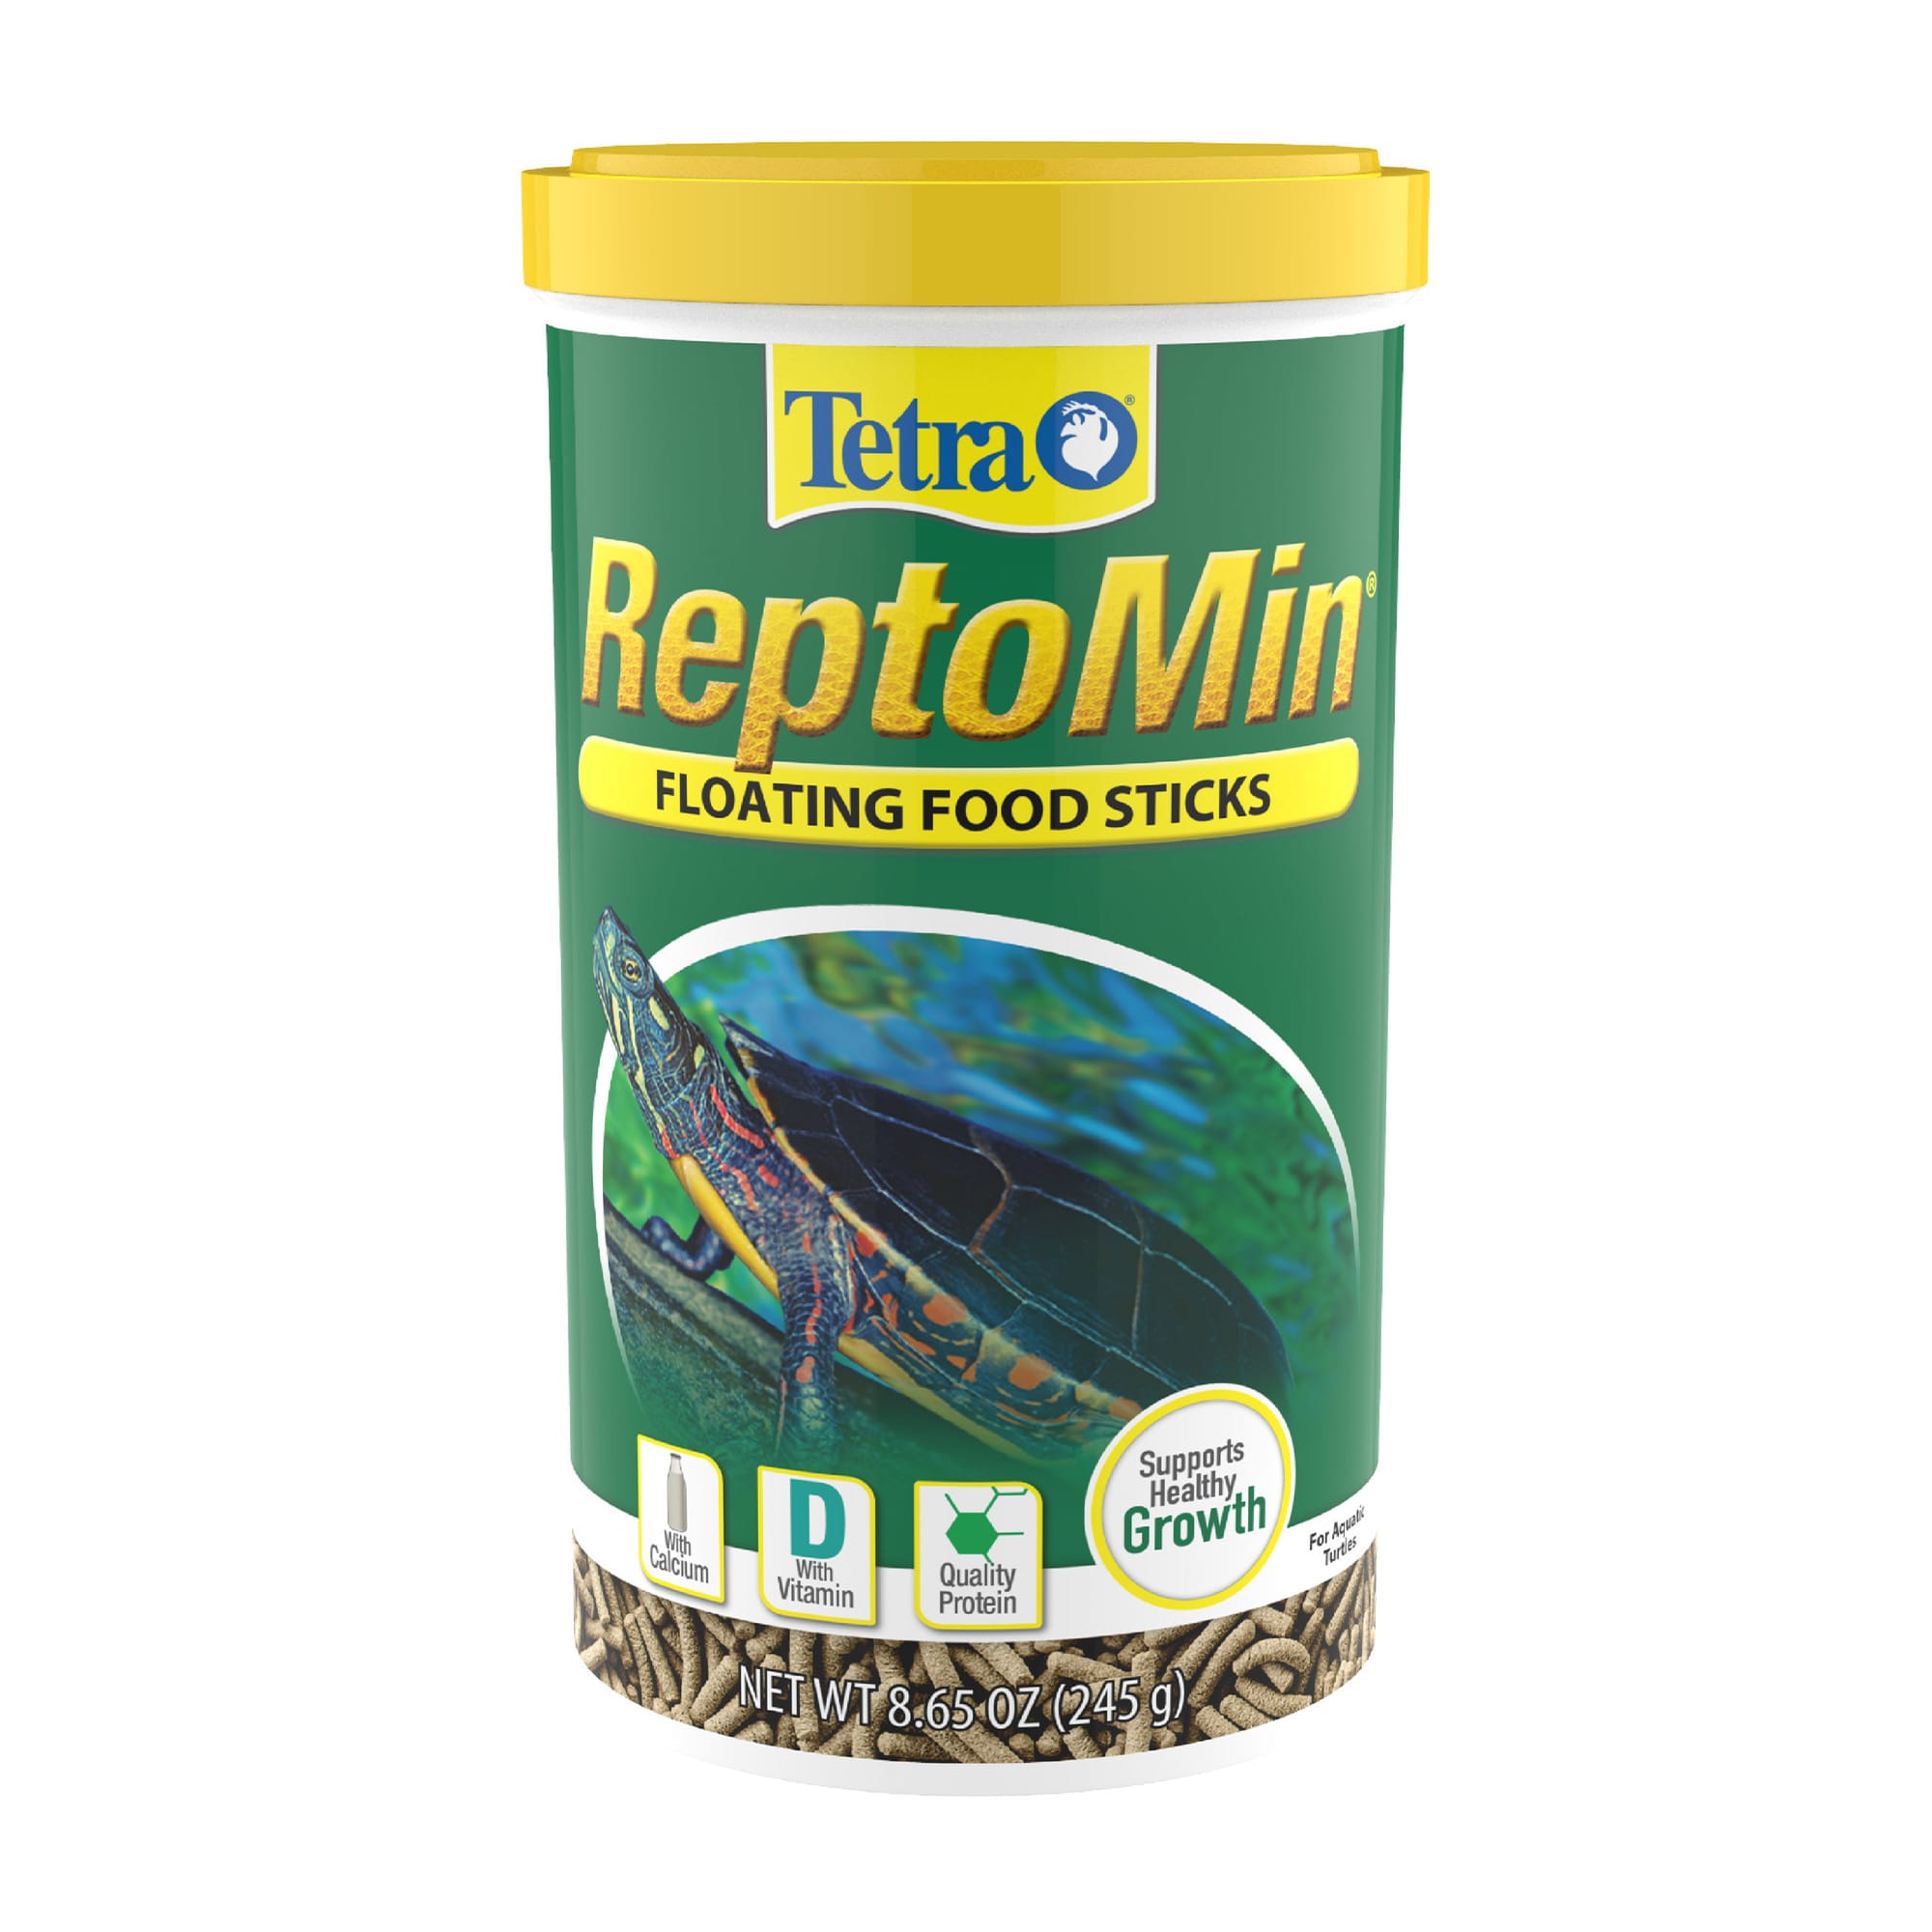 Tetra ReptoMin Floating Food Sticks